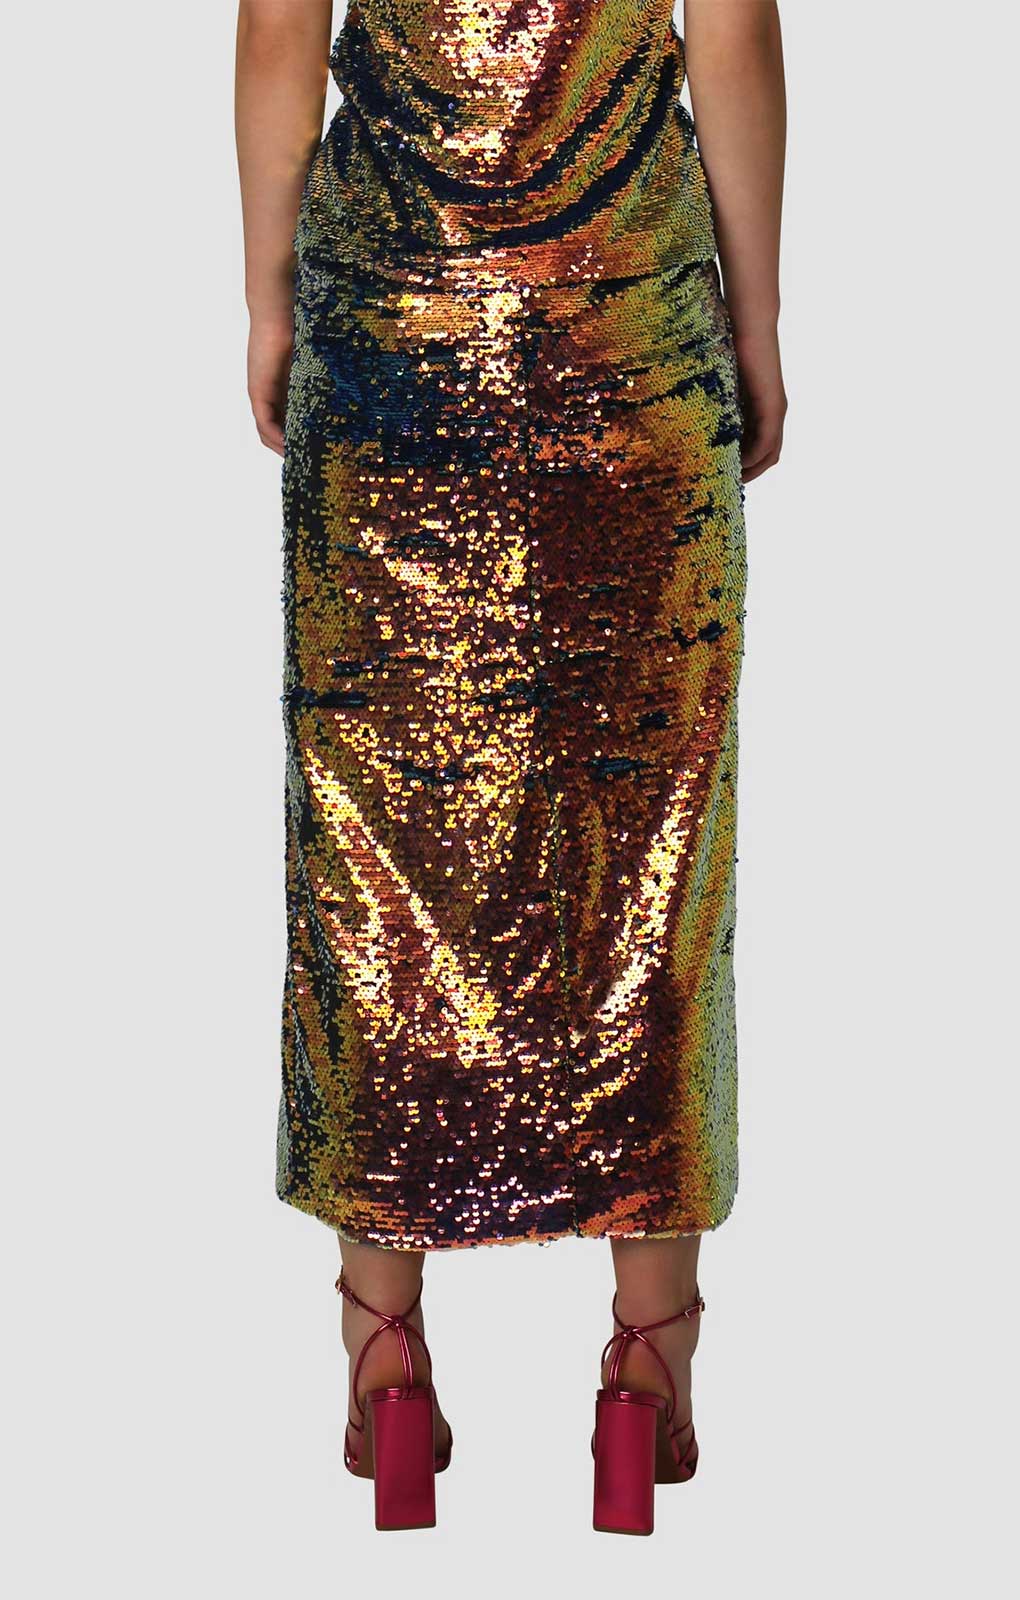 Amy Lynn Arial Top & Venus Skirt product image